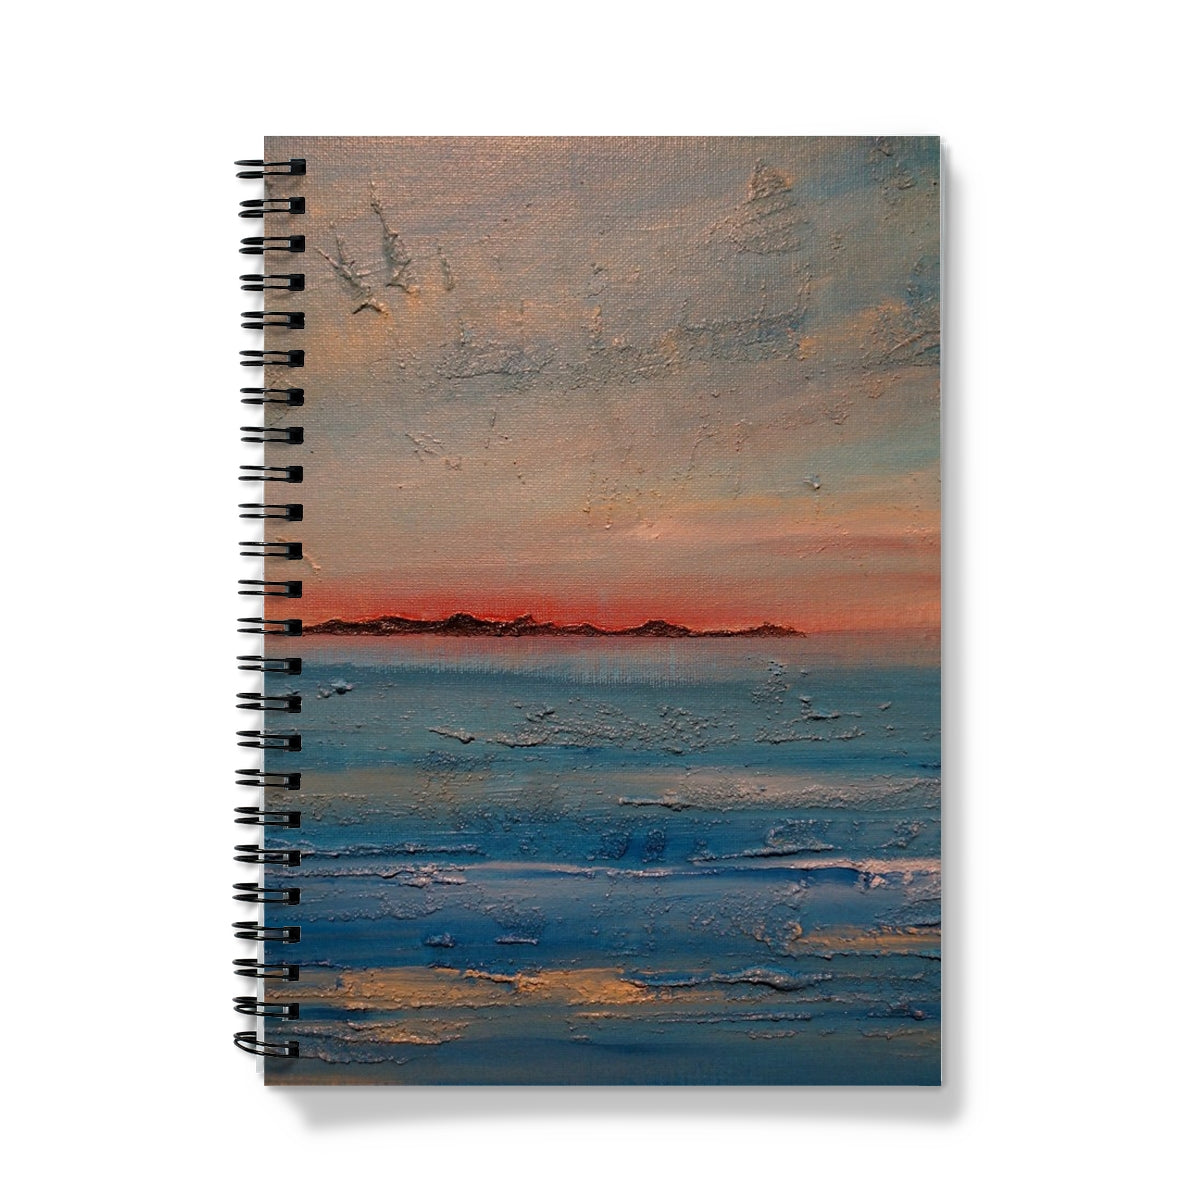 Gigha Sunset Art Gifts Notebook-Journals & Notebooks-Hebridean Islands Art Gallery-A5-Graph-Paintings, Prints, Homeware, Art Gifts From Scotland By Scottish Artist Kevin Hunter